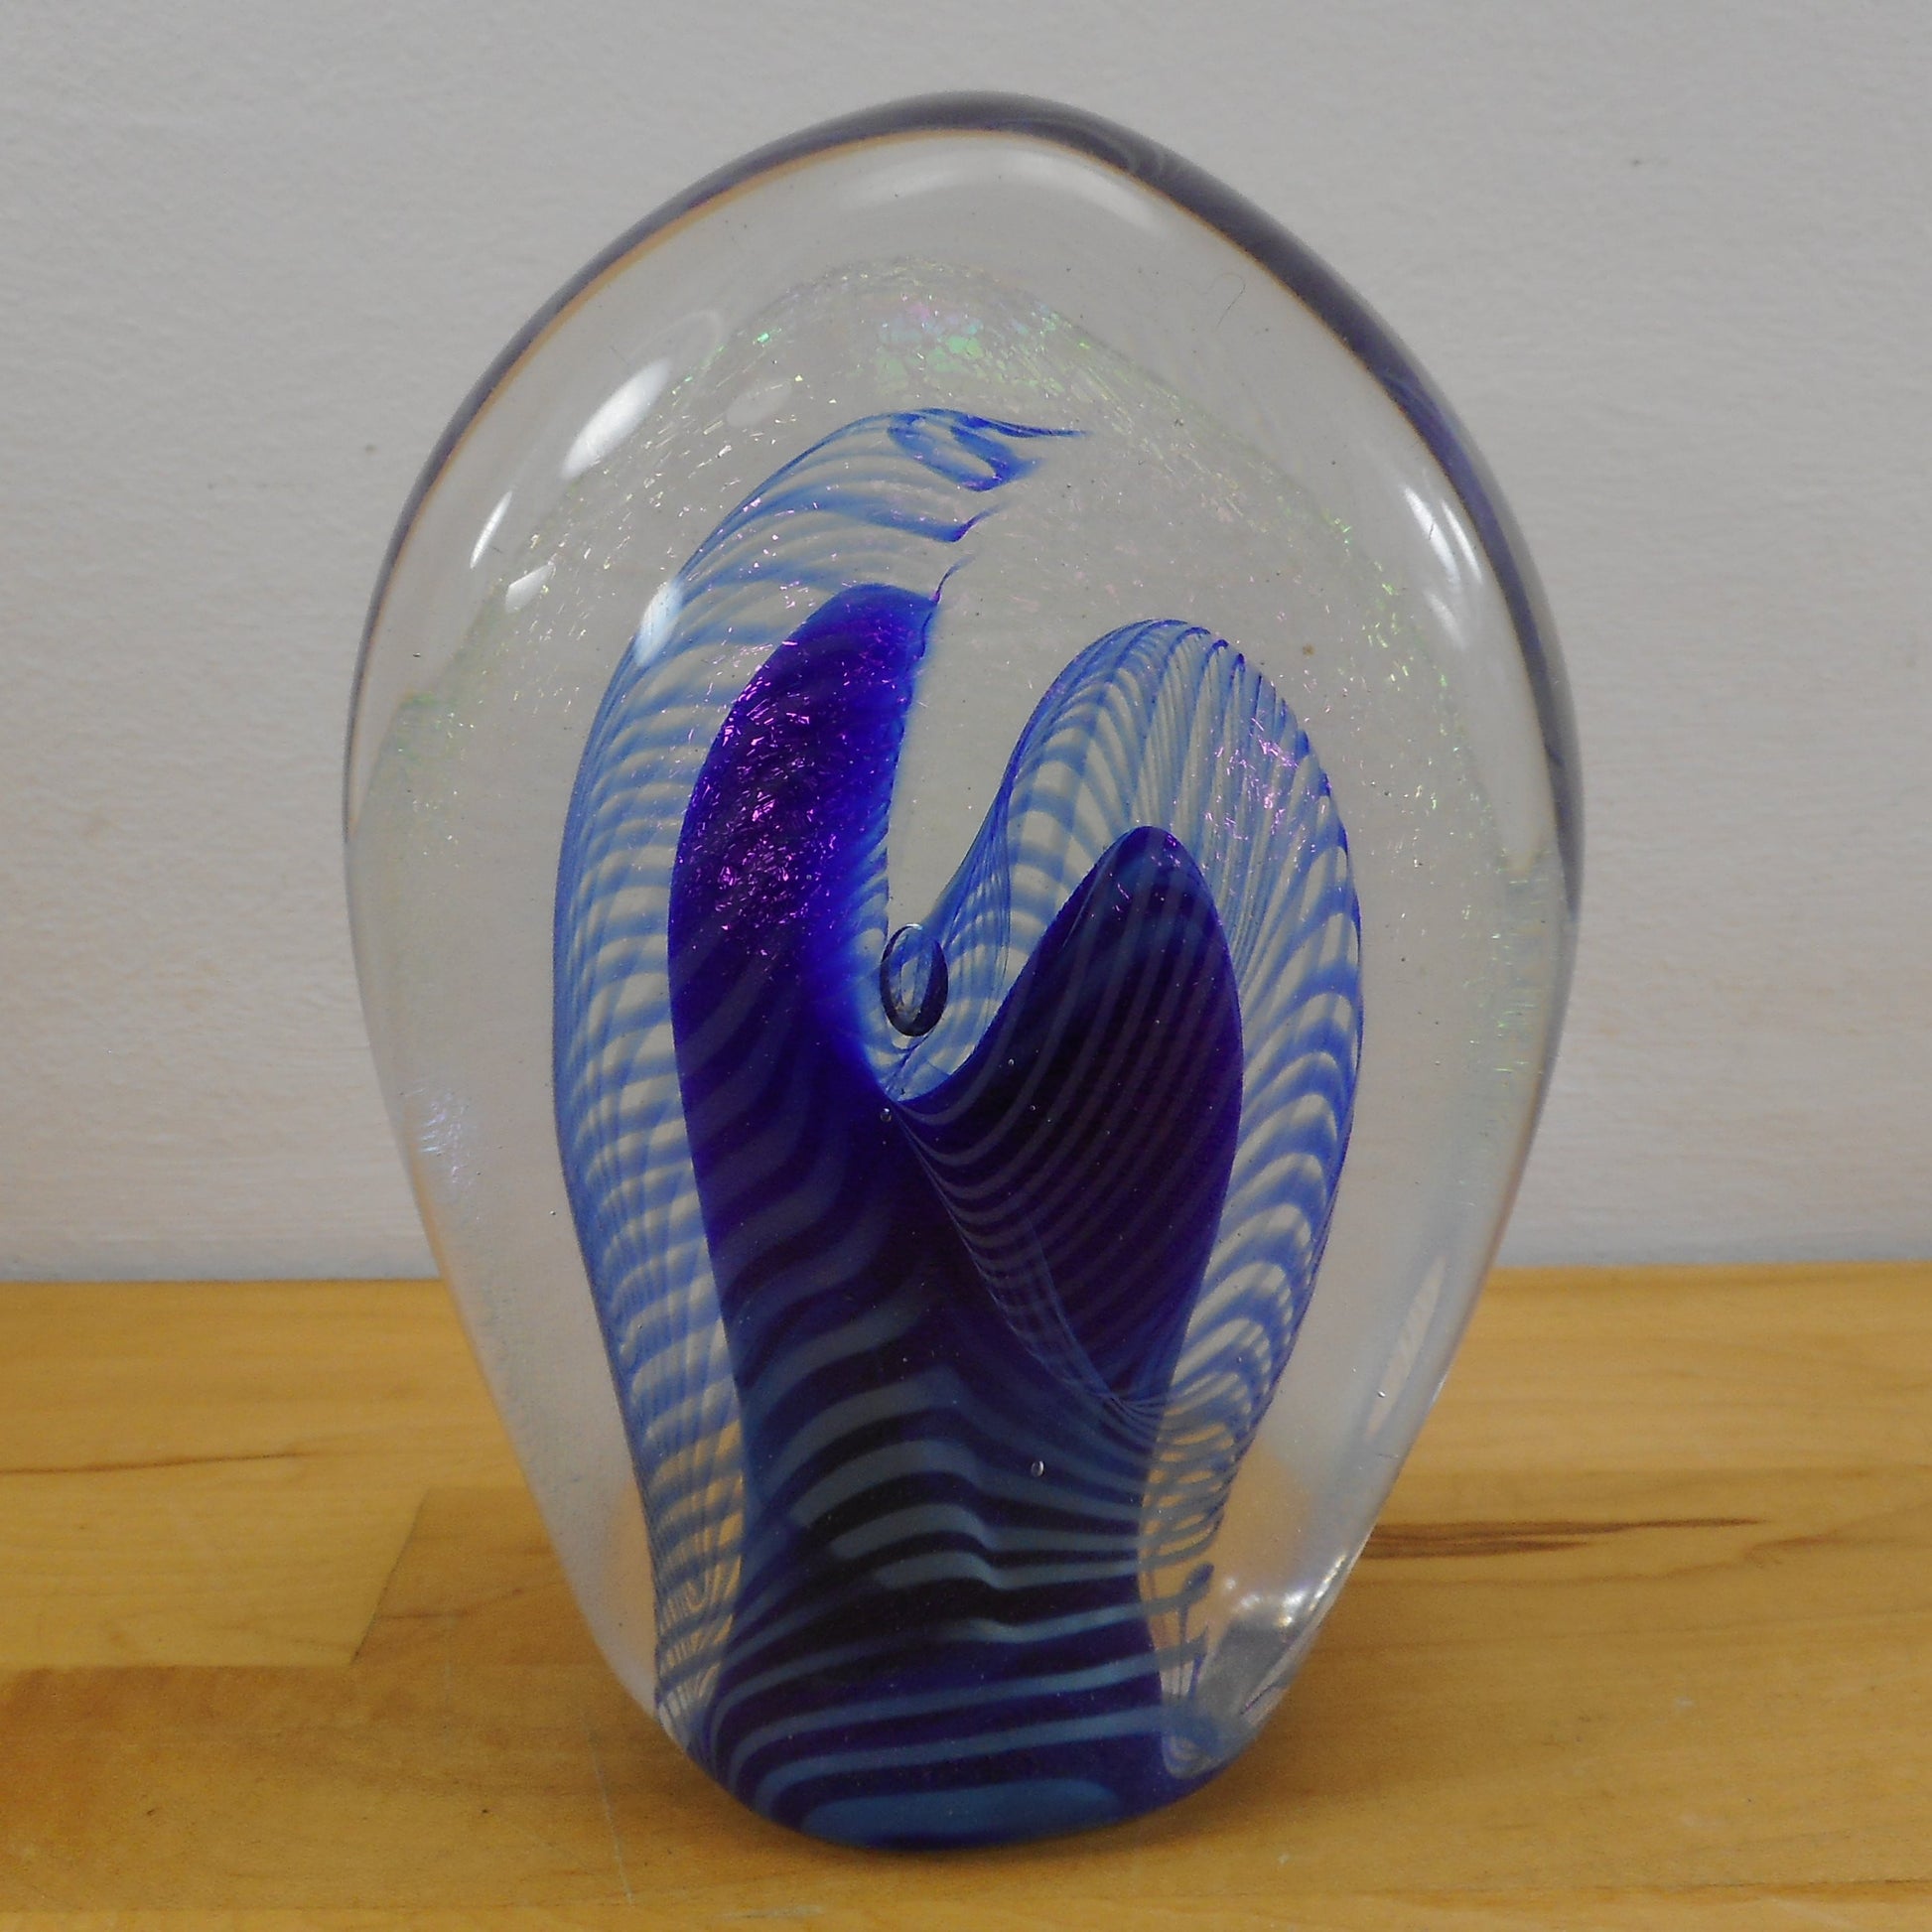 Robert Eickholt Signed 1983 Iridescent Art Glass Paperweight - Large 6" Control Bubble